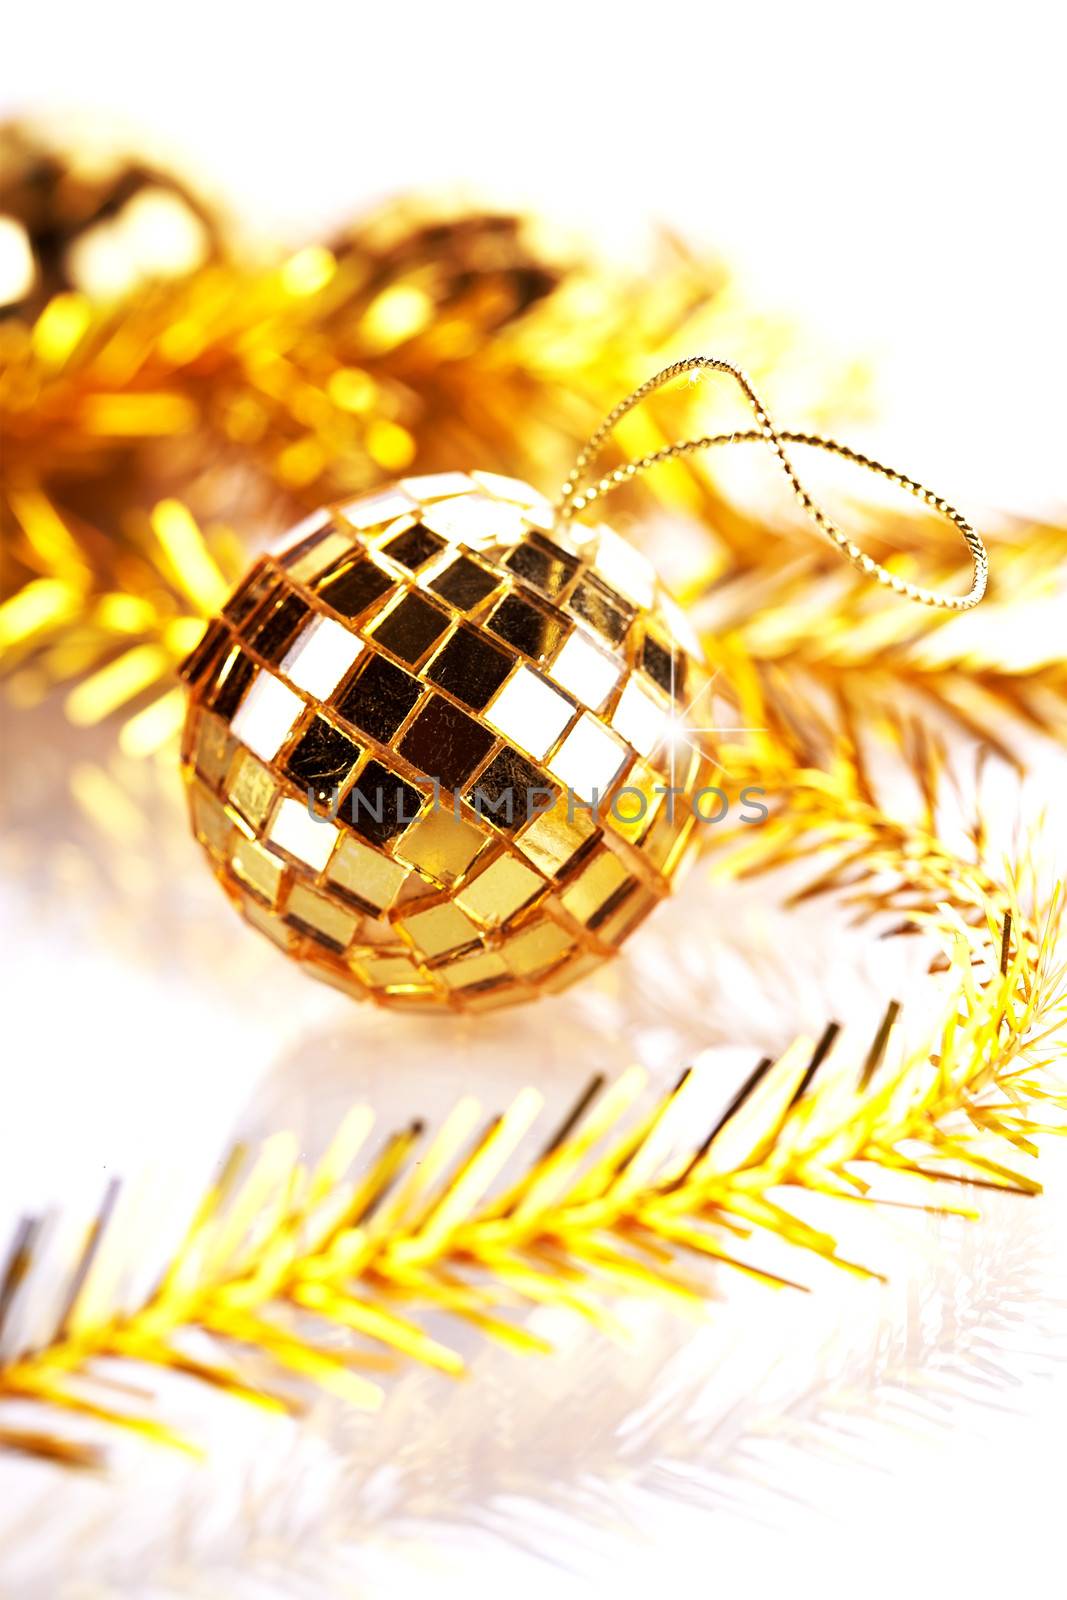 Gold mirror sphere and Christmas tinsel. by Azaliya